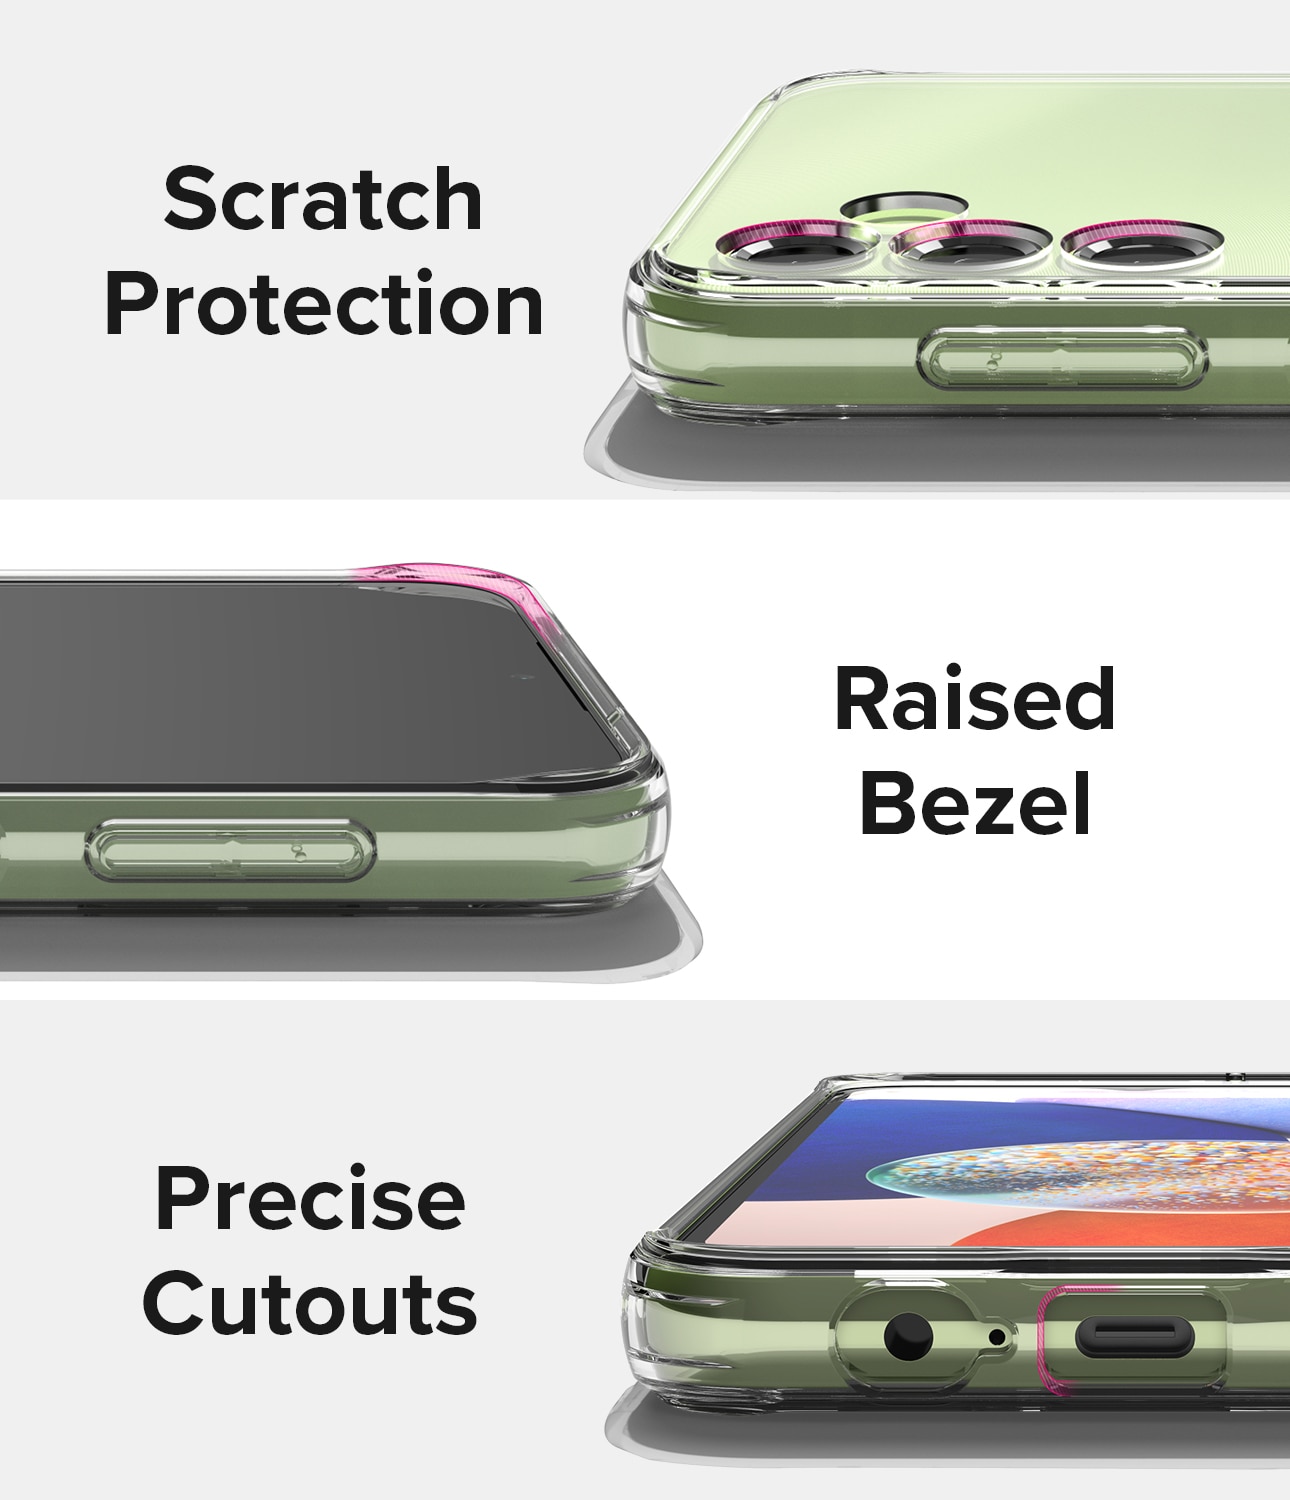 Samsung Galaxy A14 Fusion Case Clear